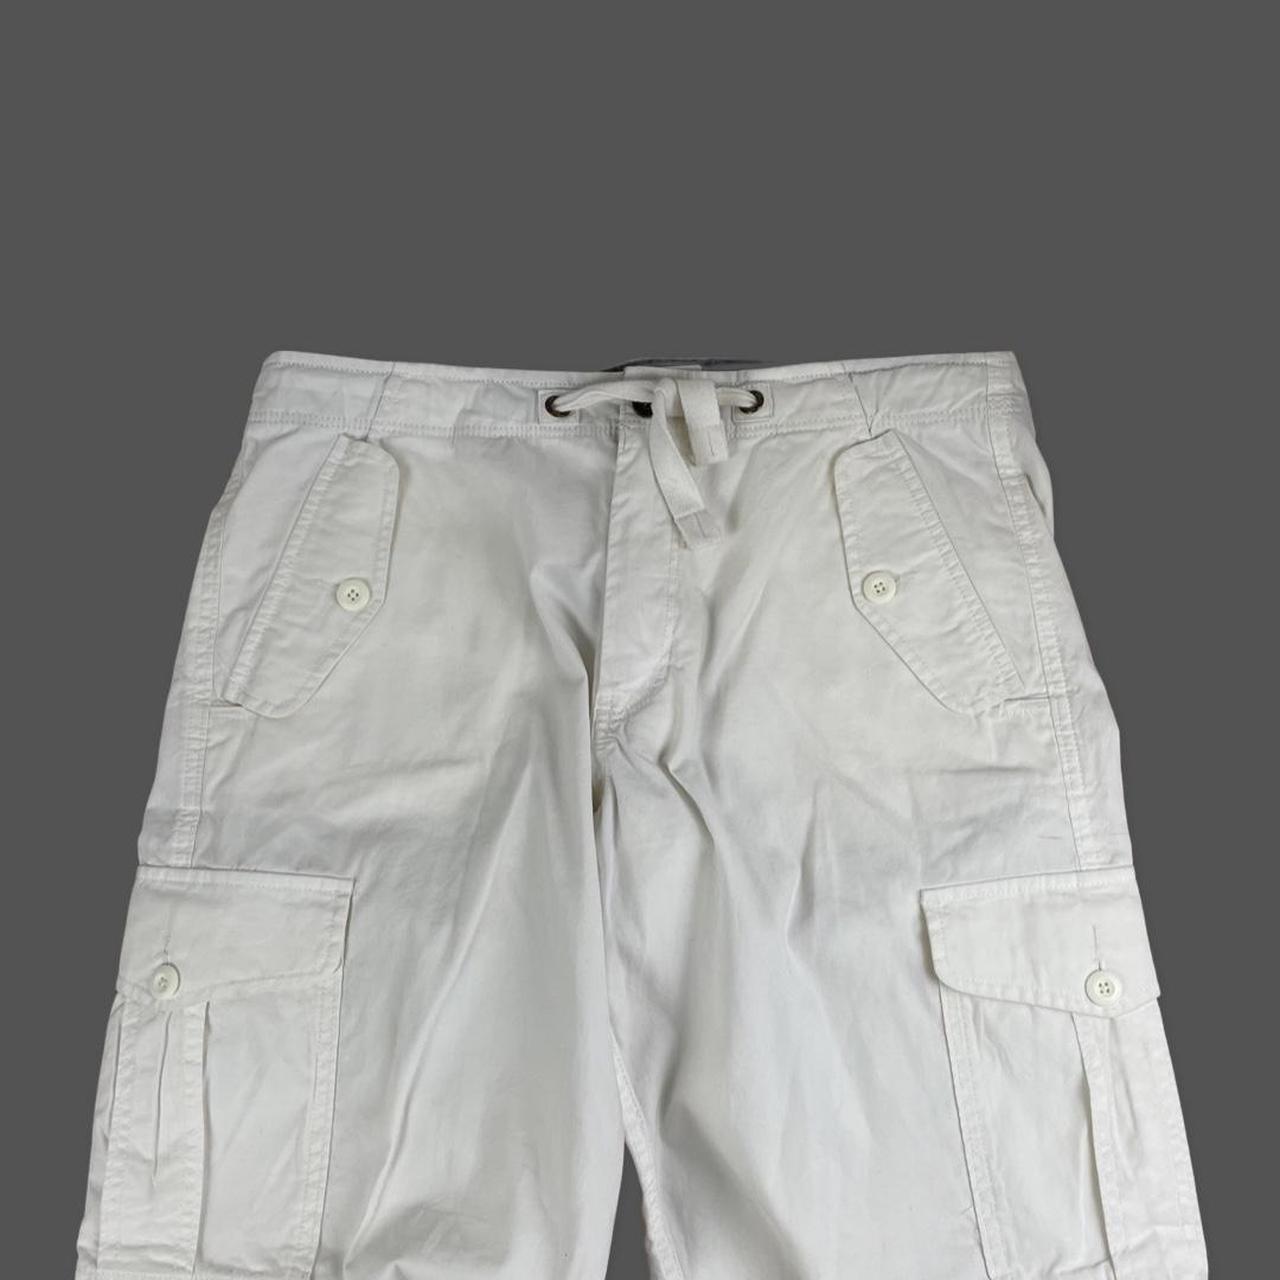 Vintage deadstock puma para cargo pants in white - Depop